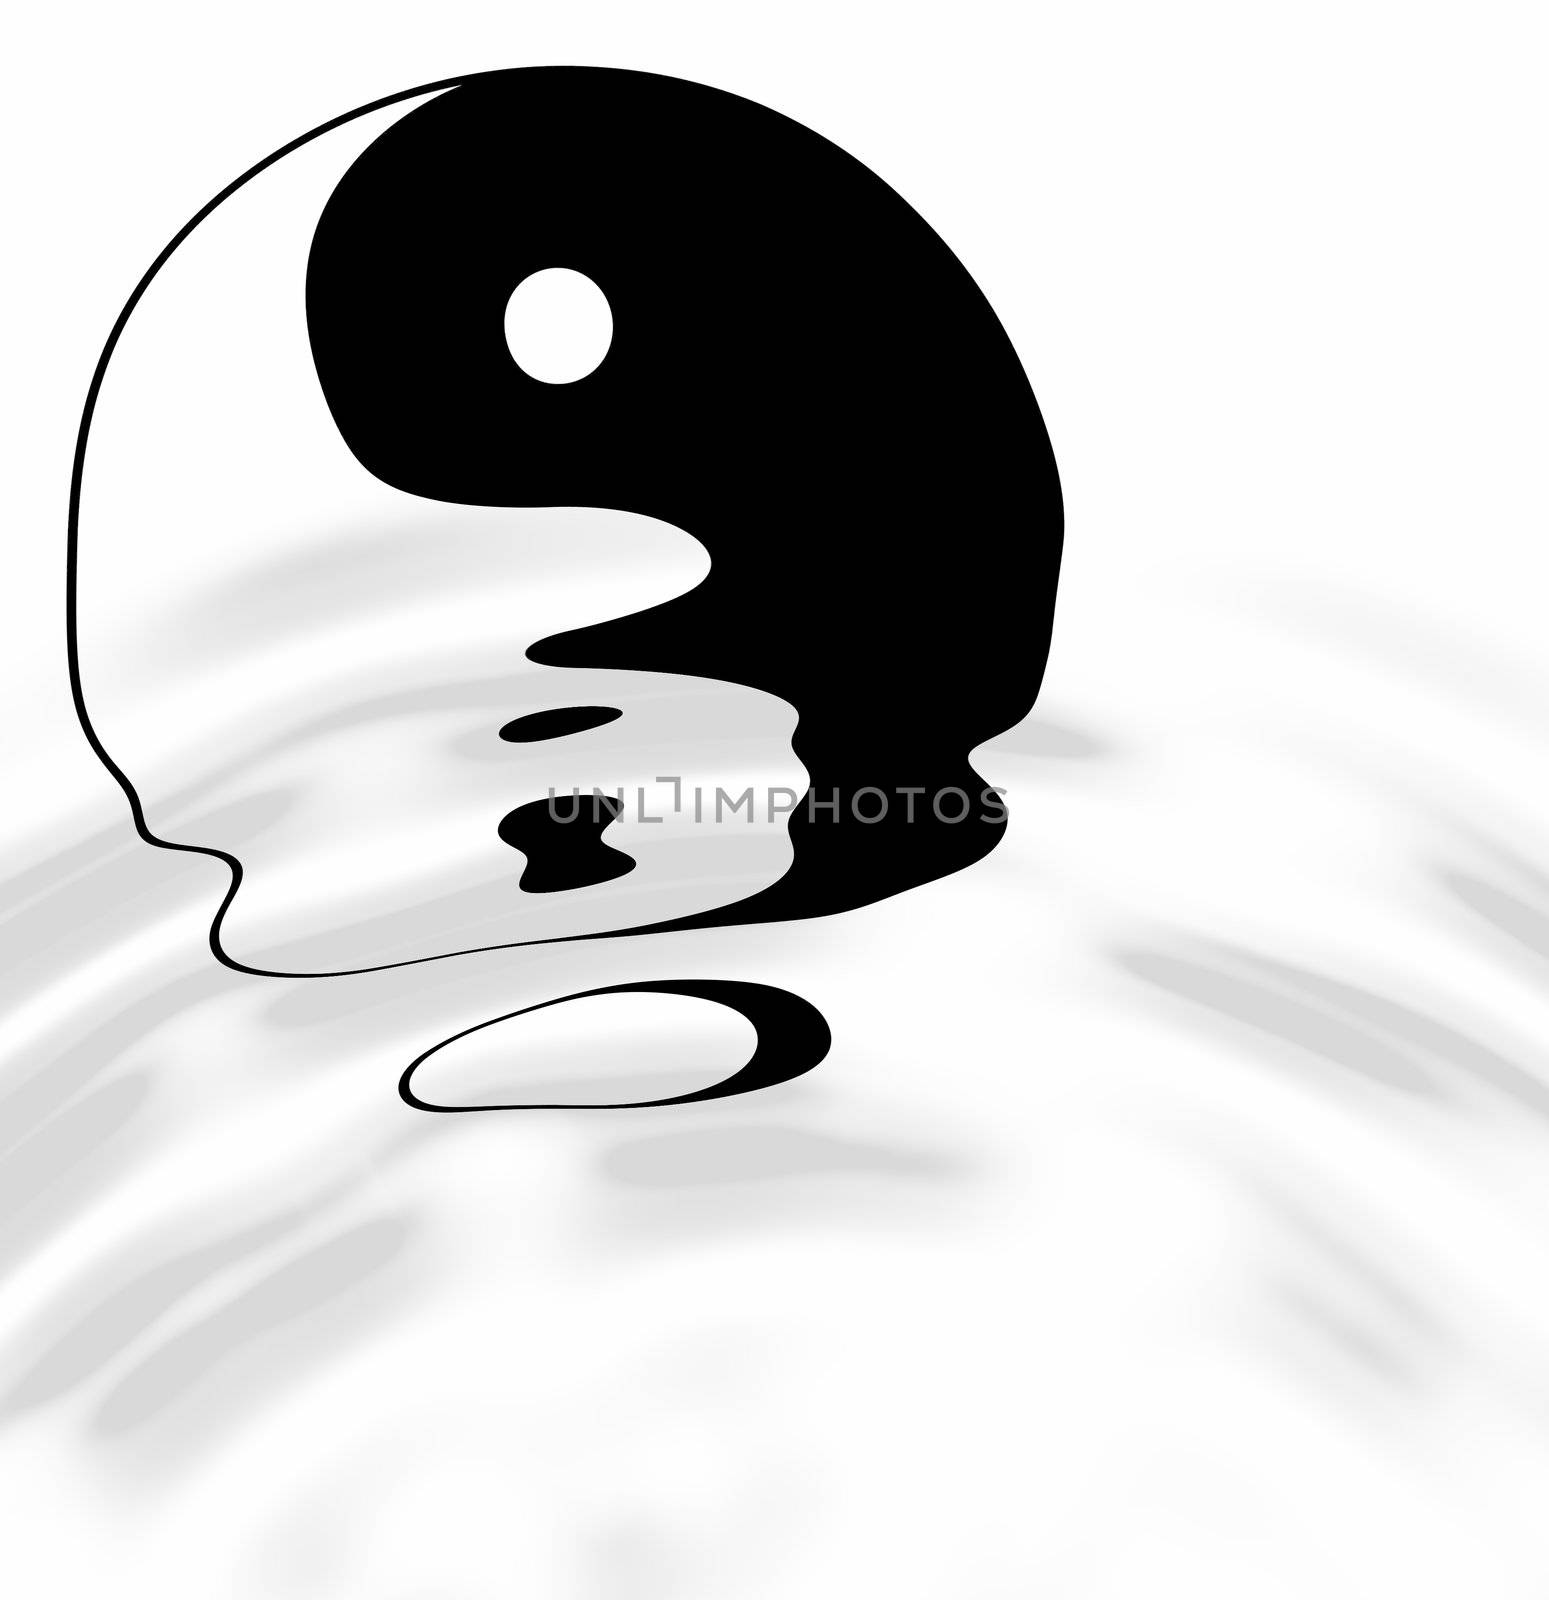 yin yang, taoistic symbol of harmony and balance with water ripples